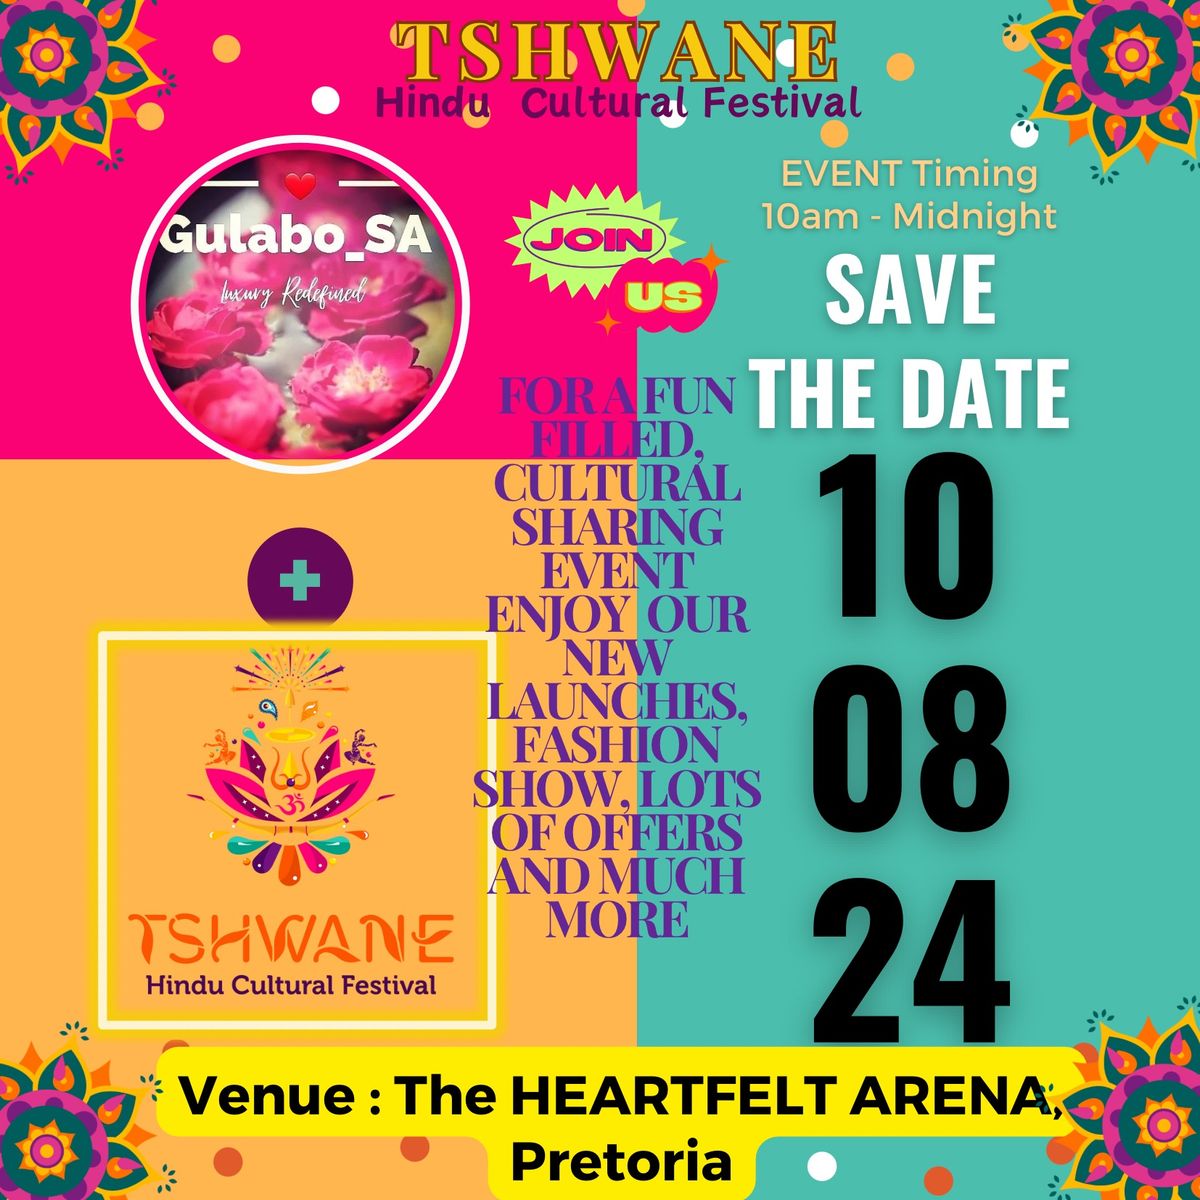 Tshwane Hindu Cultural Festival with Gulabo_SA